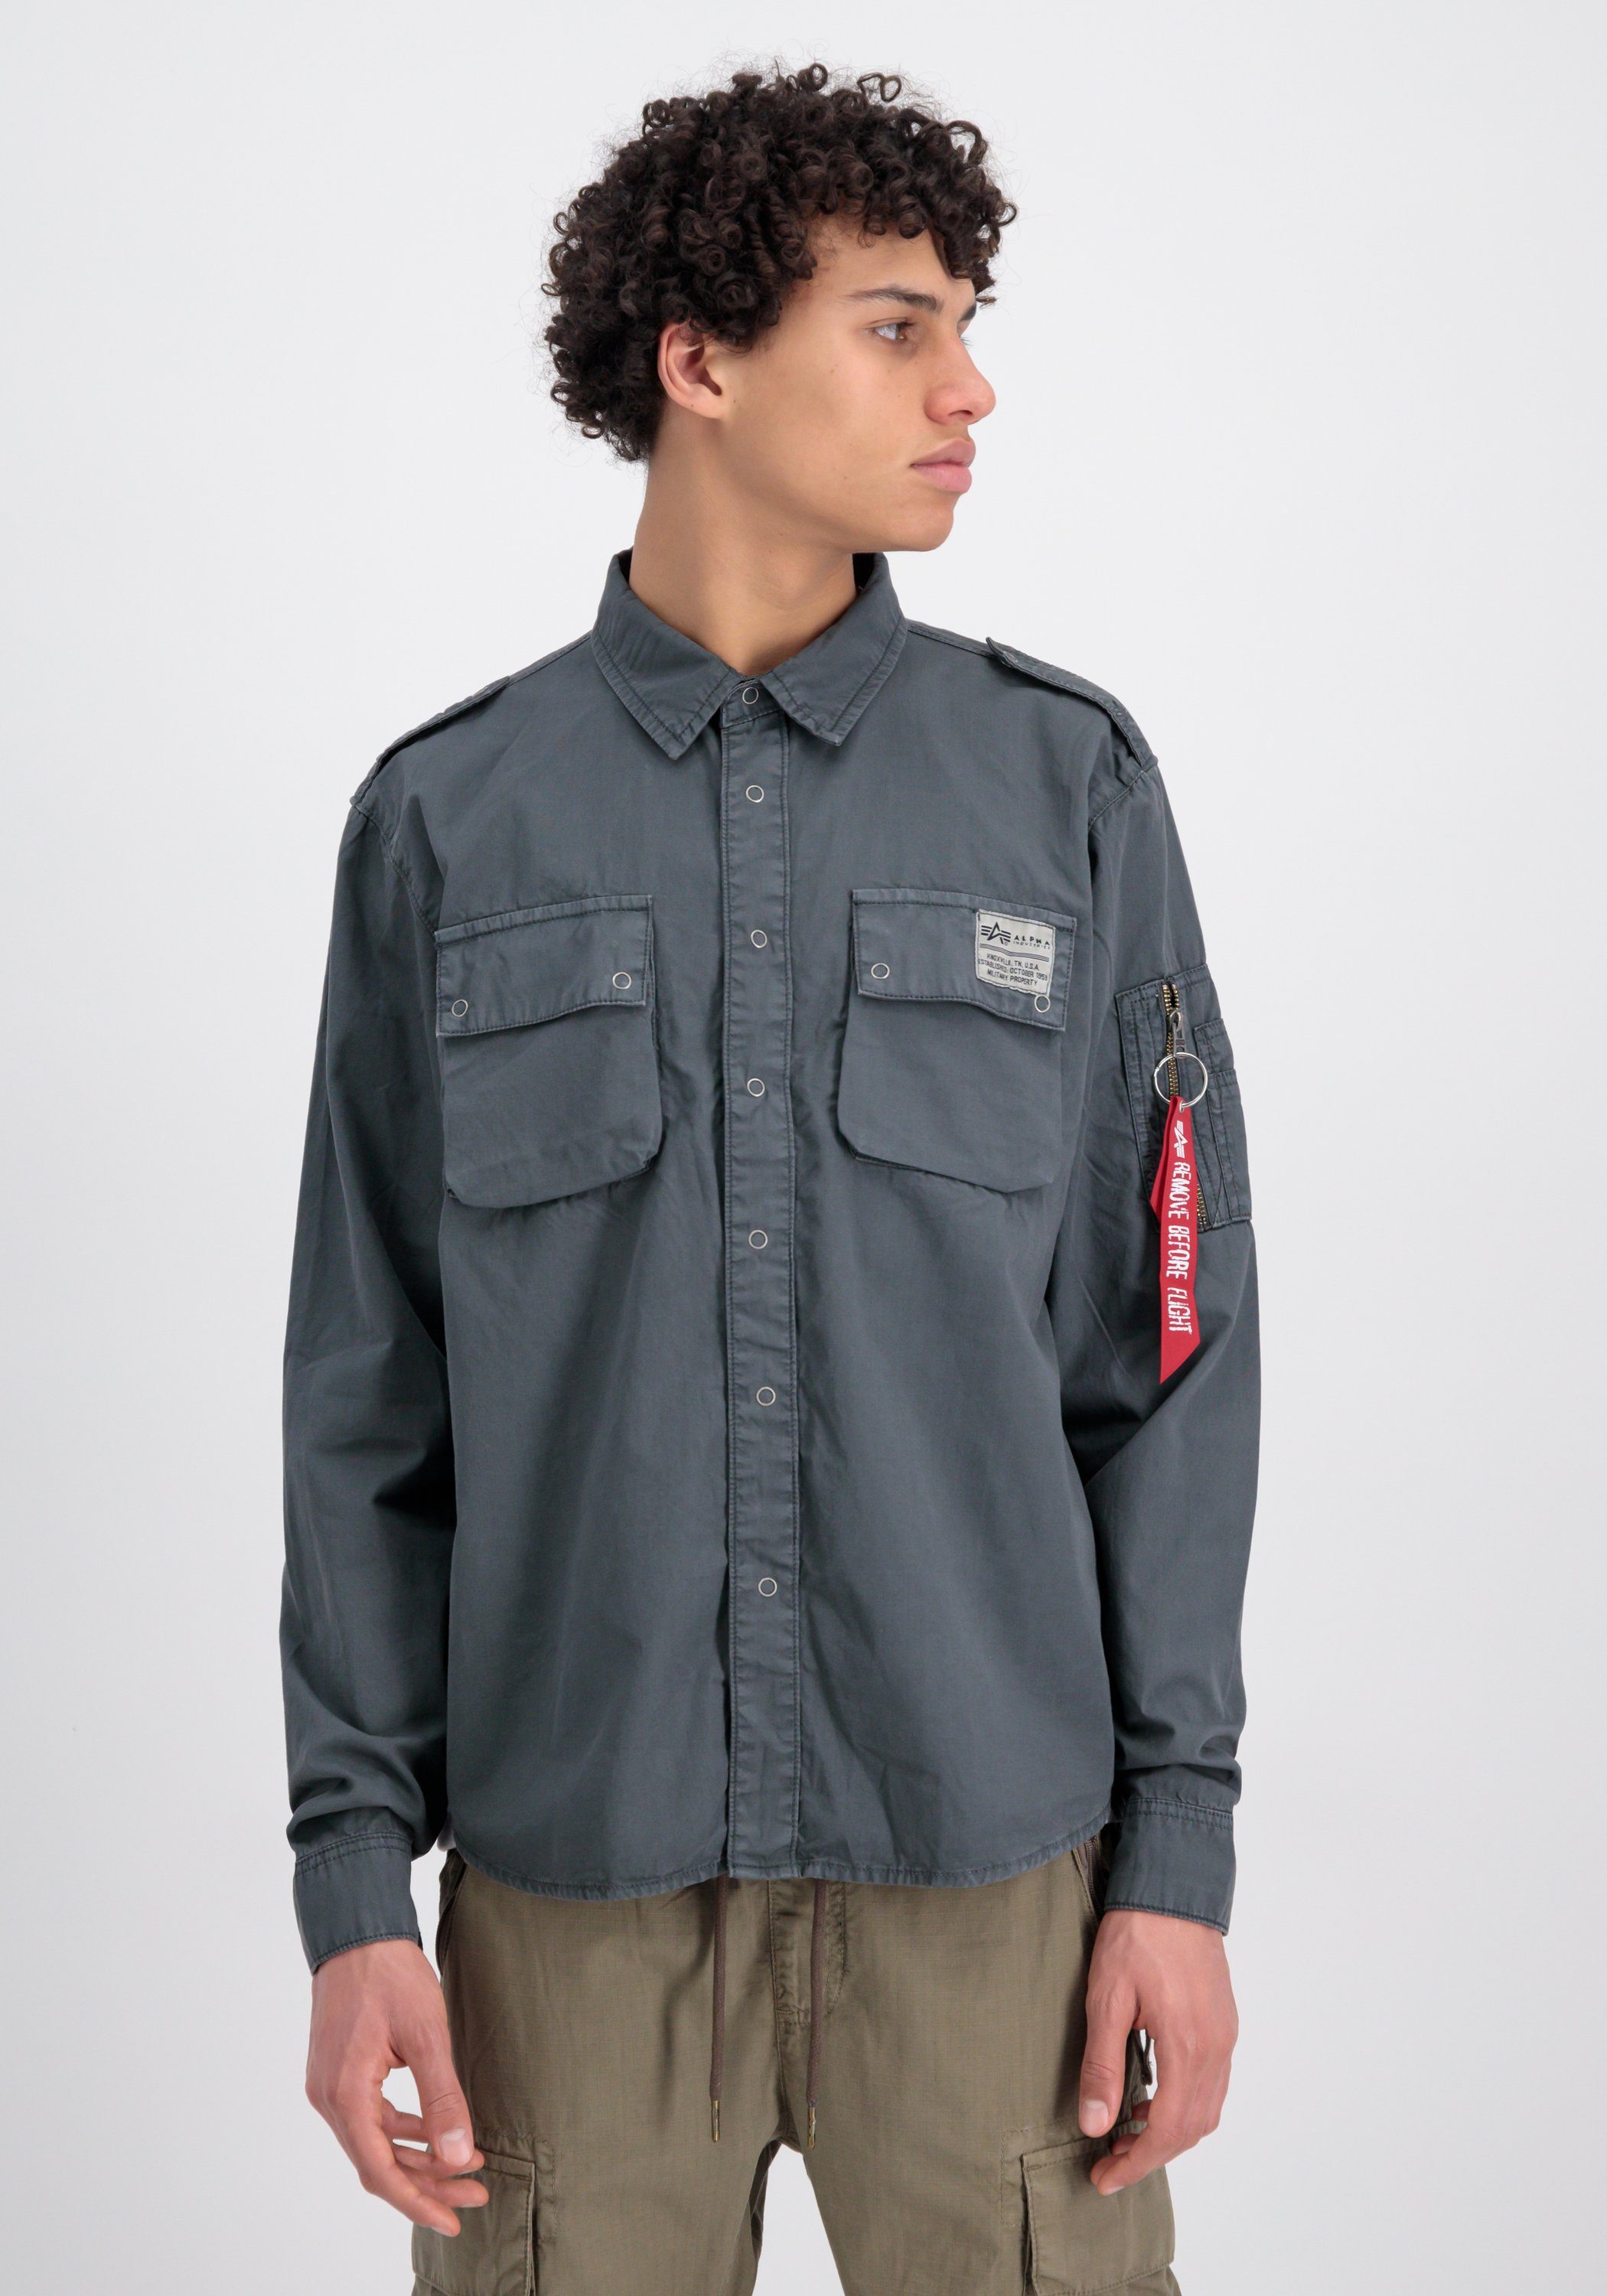 Military Industries - Overshirts Alpha Hemdjacke Alpha grey vintage Urban Shirt Industries Men